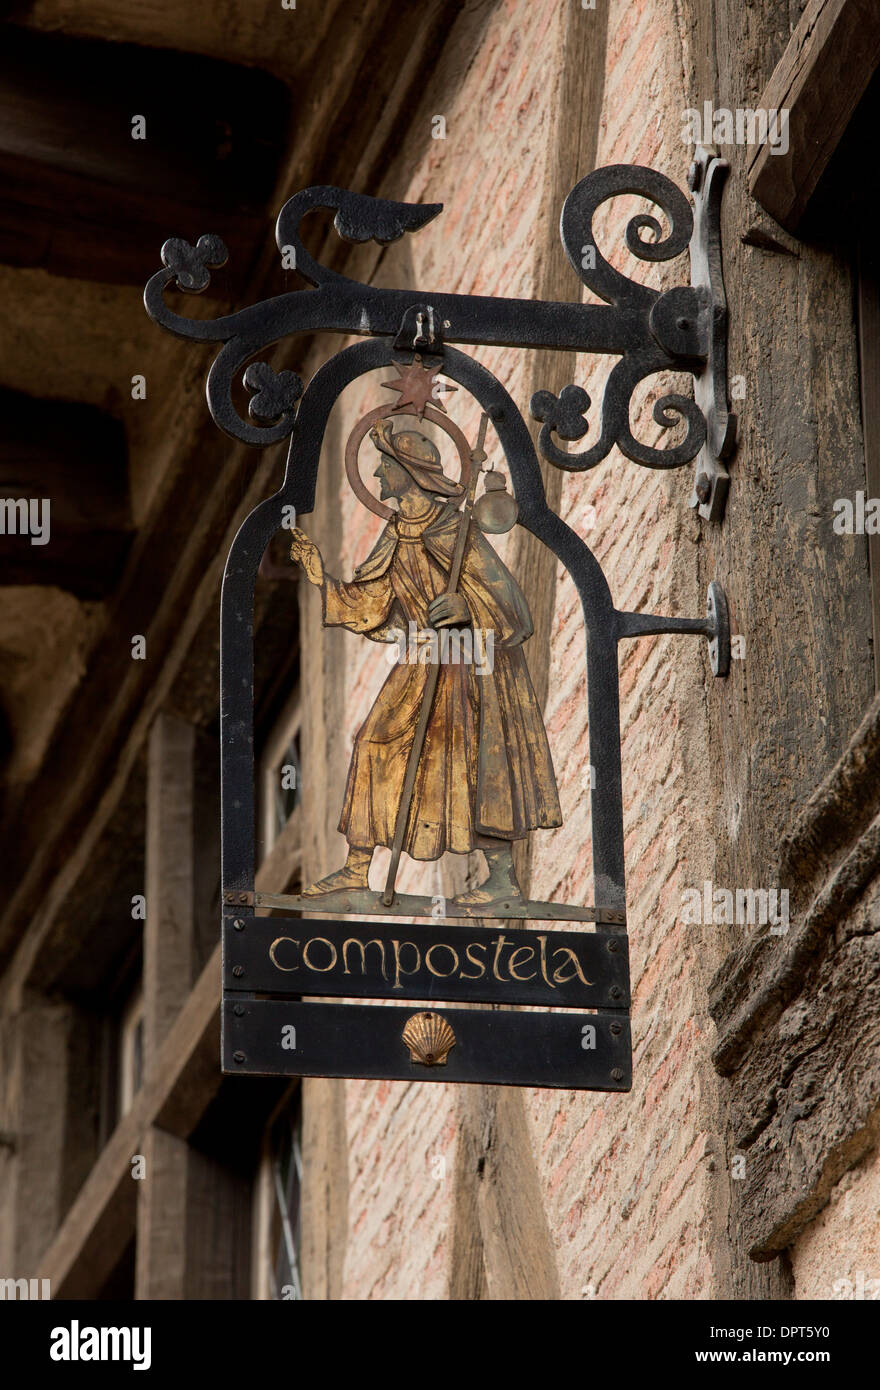 Compostela pilgrim sign, in the Rue de la Vau Saint-Jacques (Chemin de Saint-Jacques de Compostelle), Parthenay, France Stock Photo